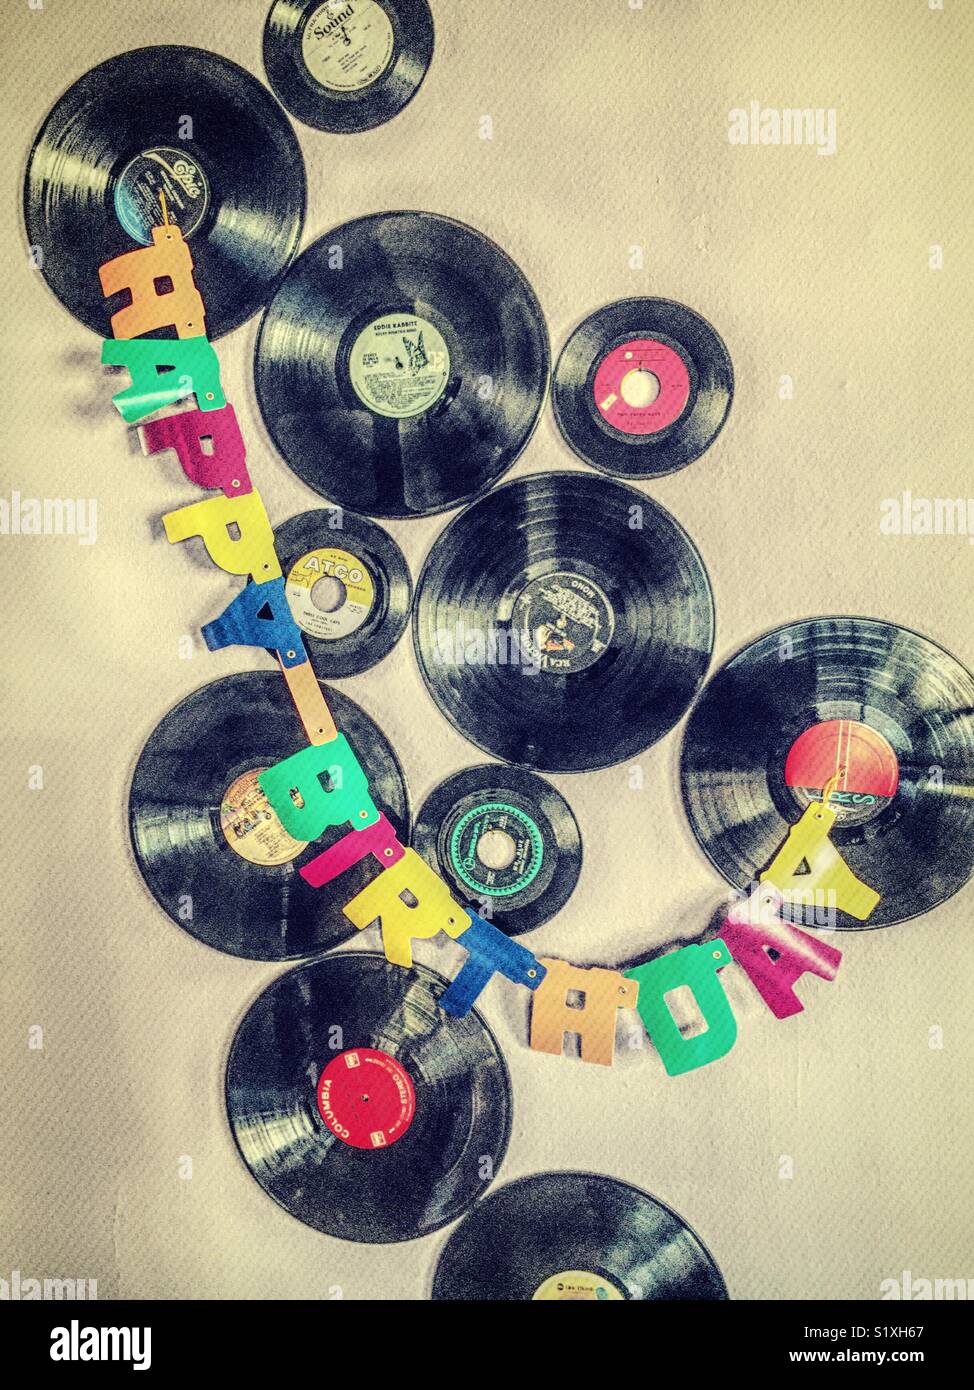 Vinyl Record display with festive happy birthday bunting, United States  Stock Photo - Alamy